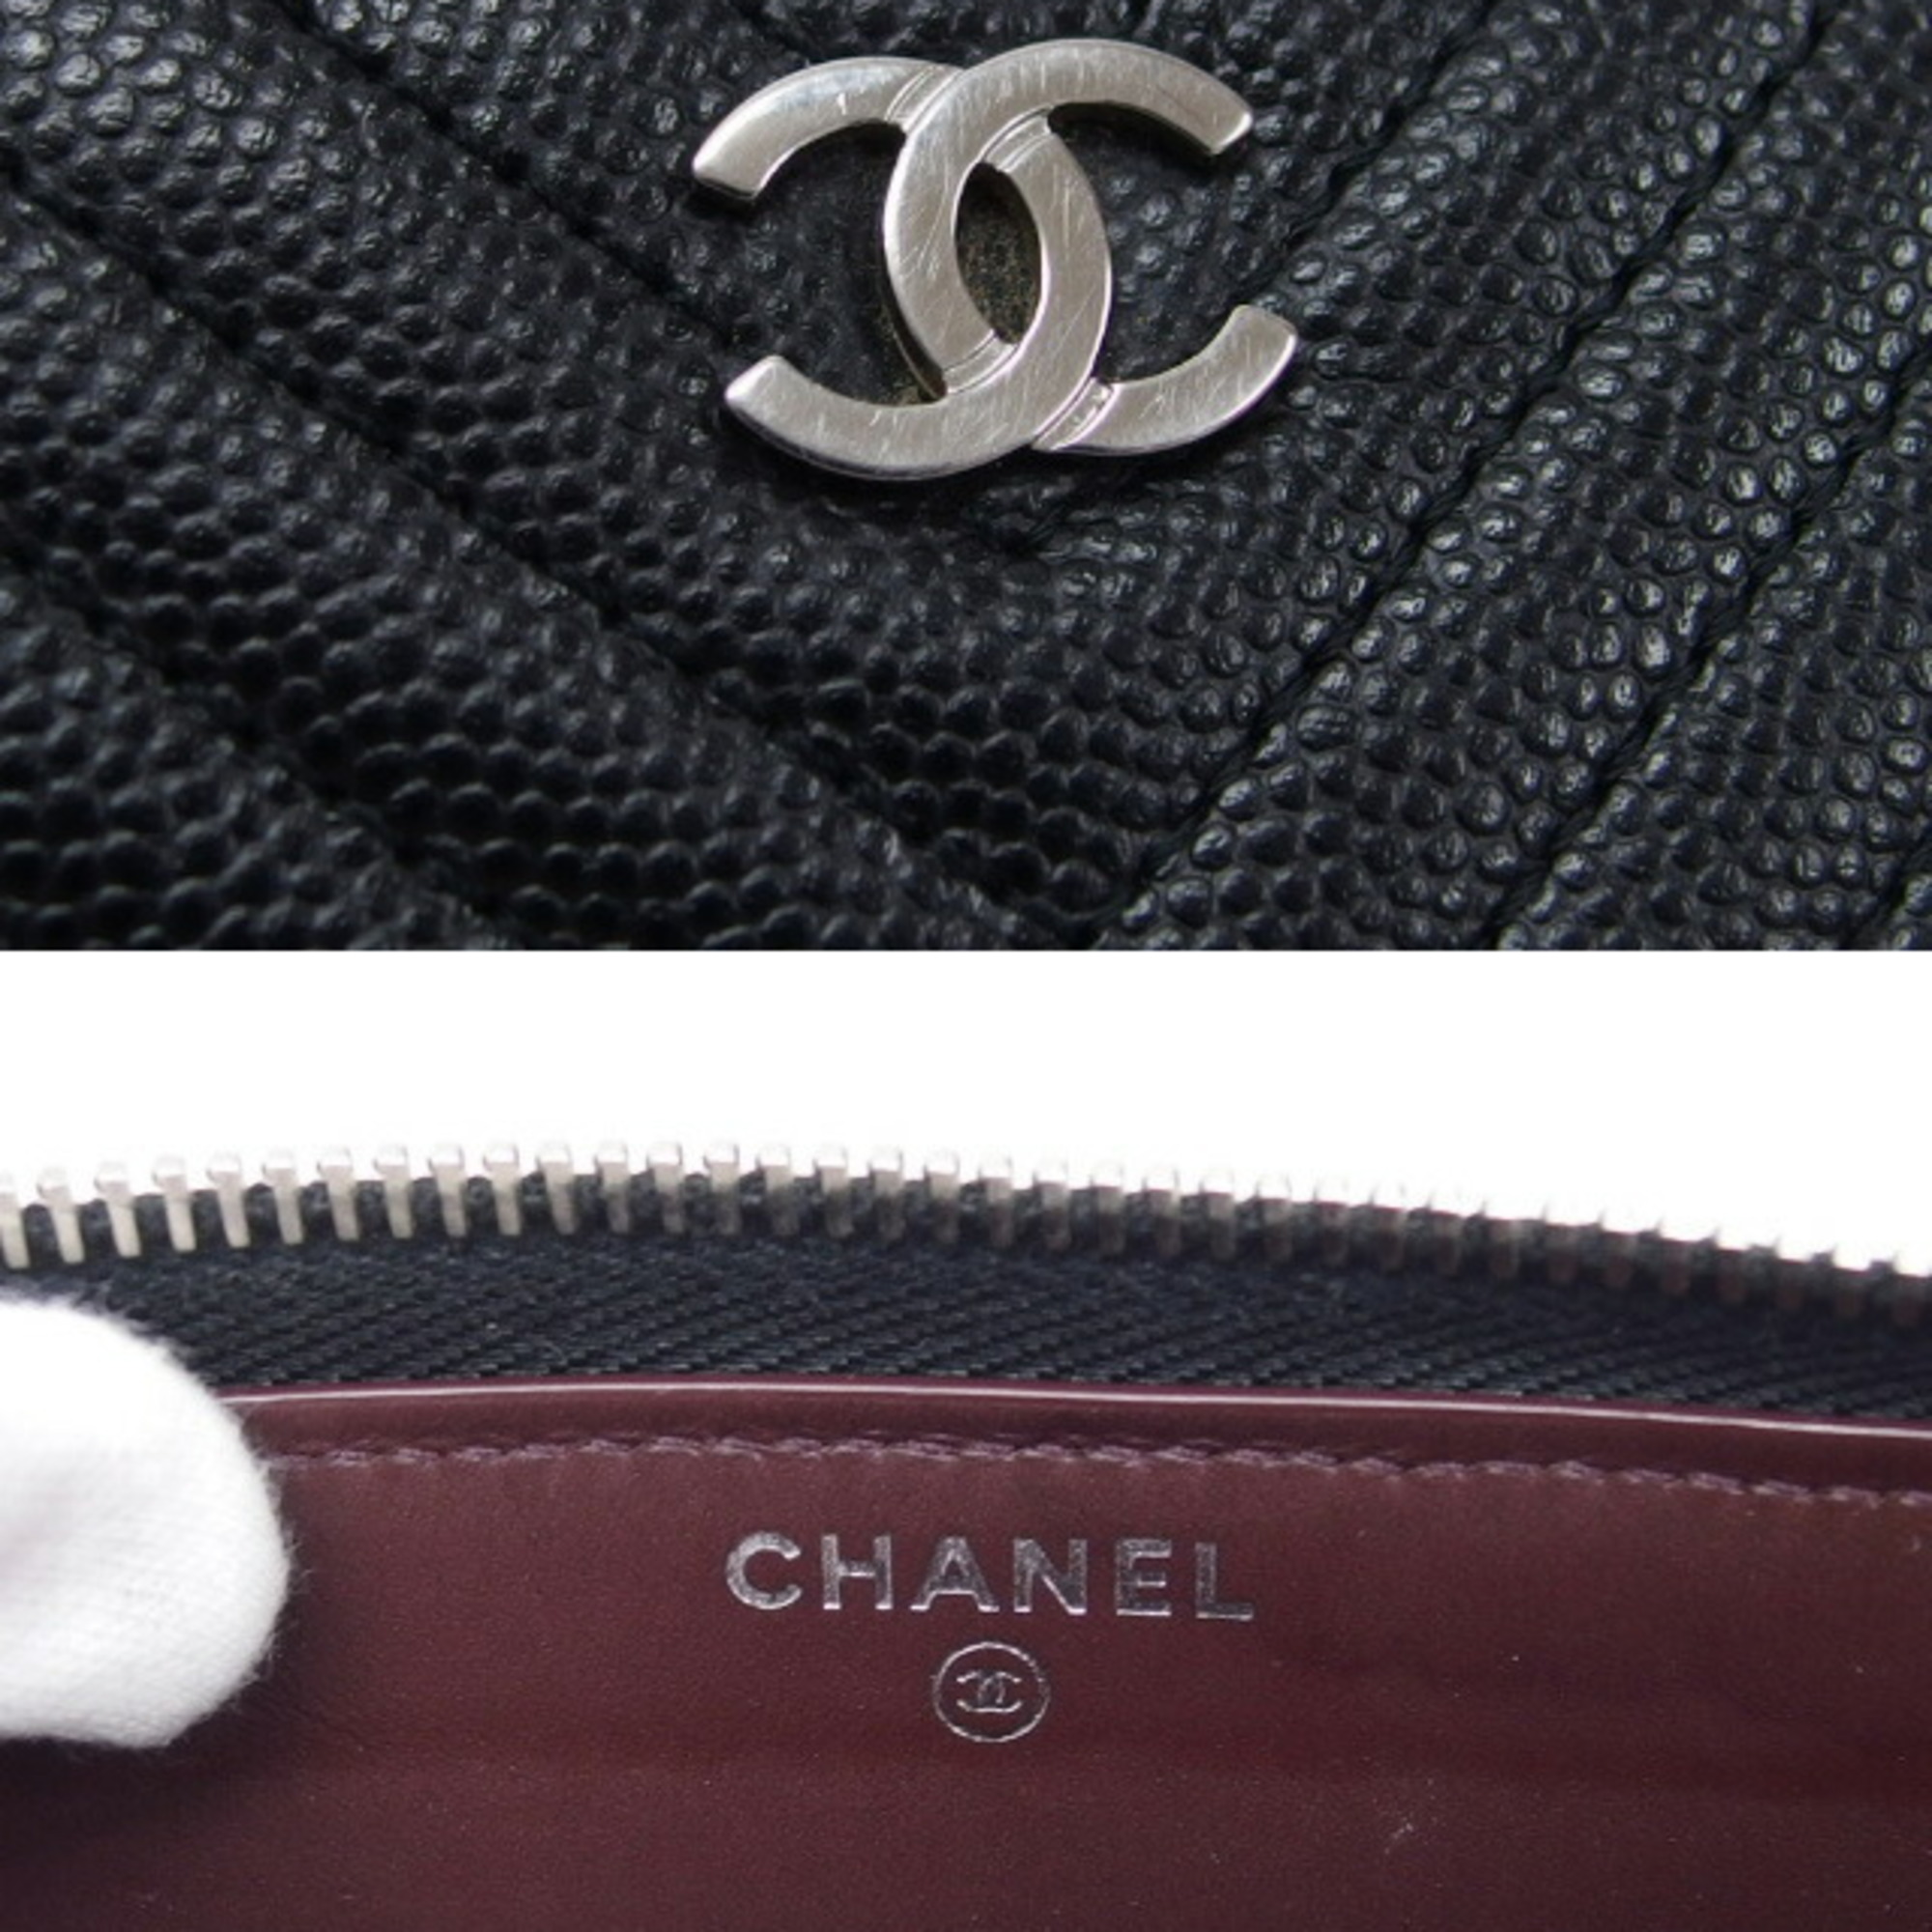 Chanel Chevron Stitch Caviar Skin Round Long Wallet Black